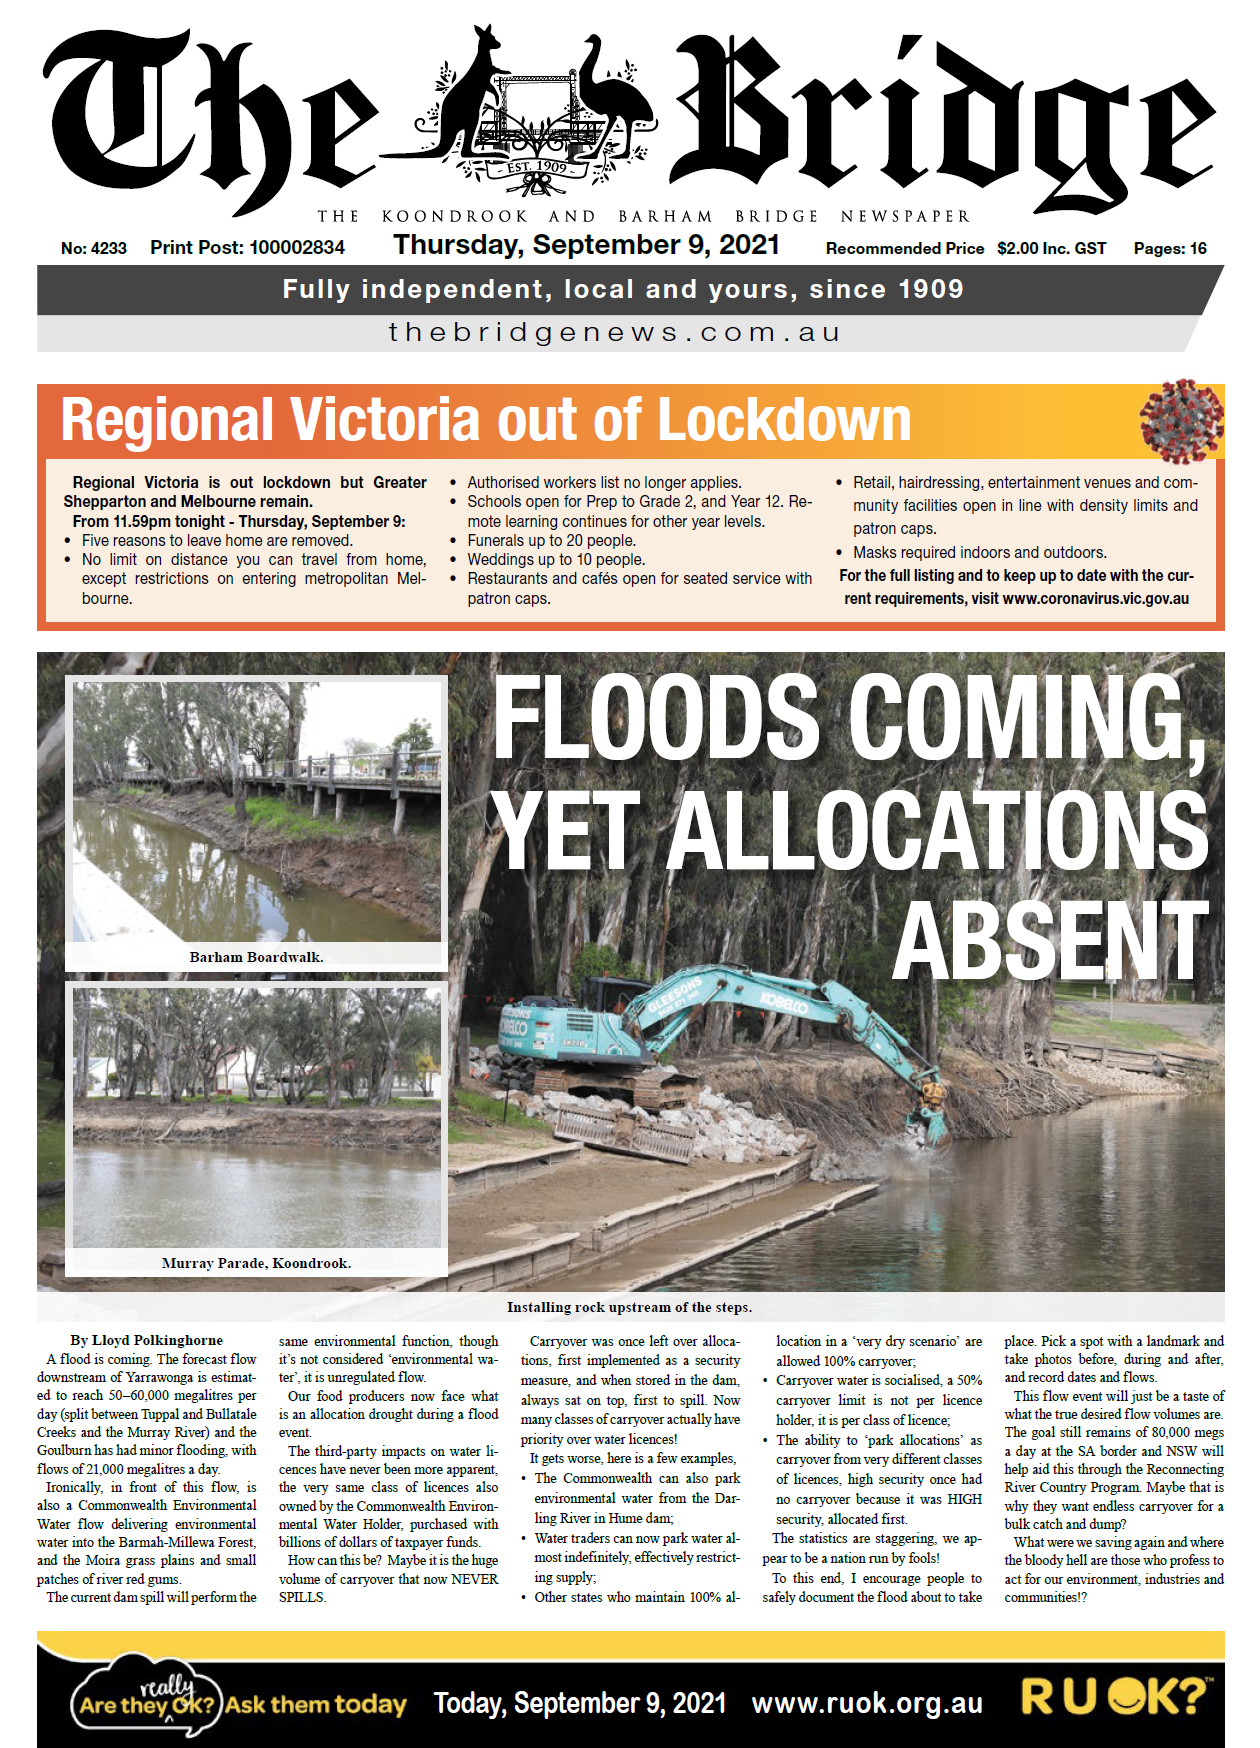 The Koondrook and Barham Bridge Newspaper 9 September 2021